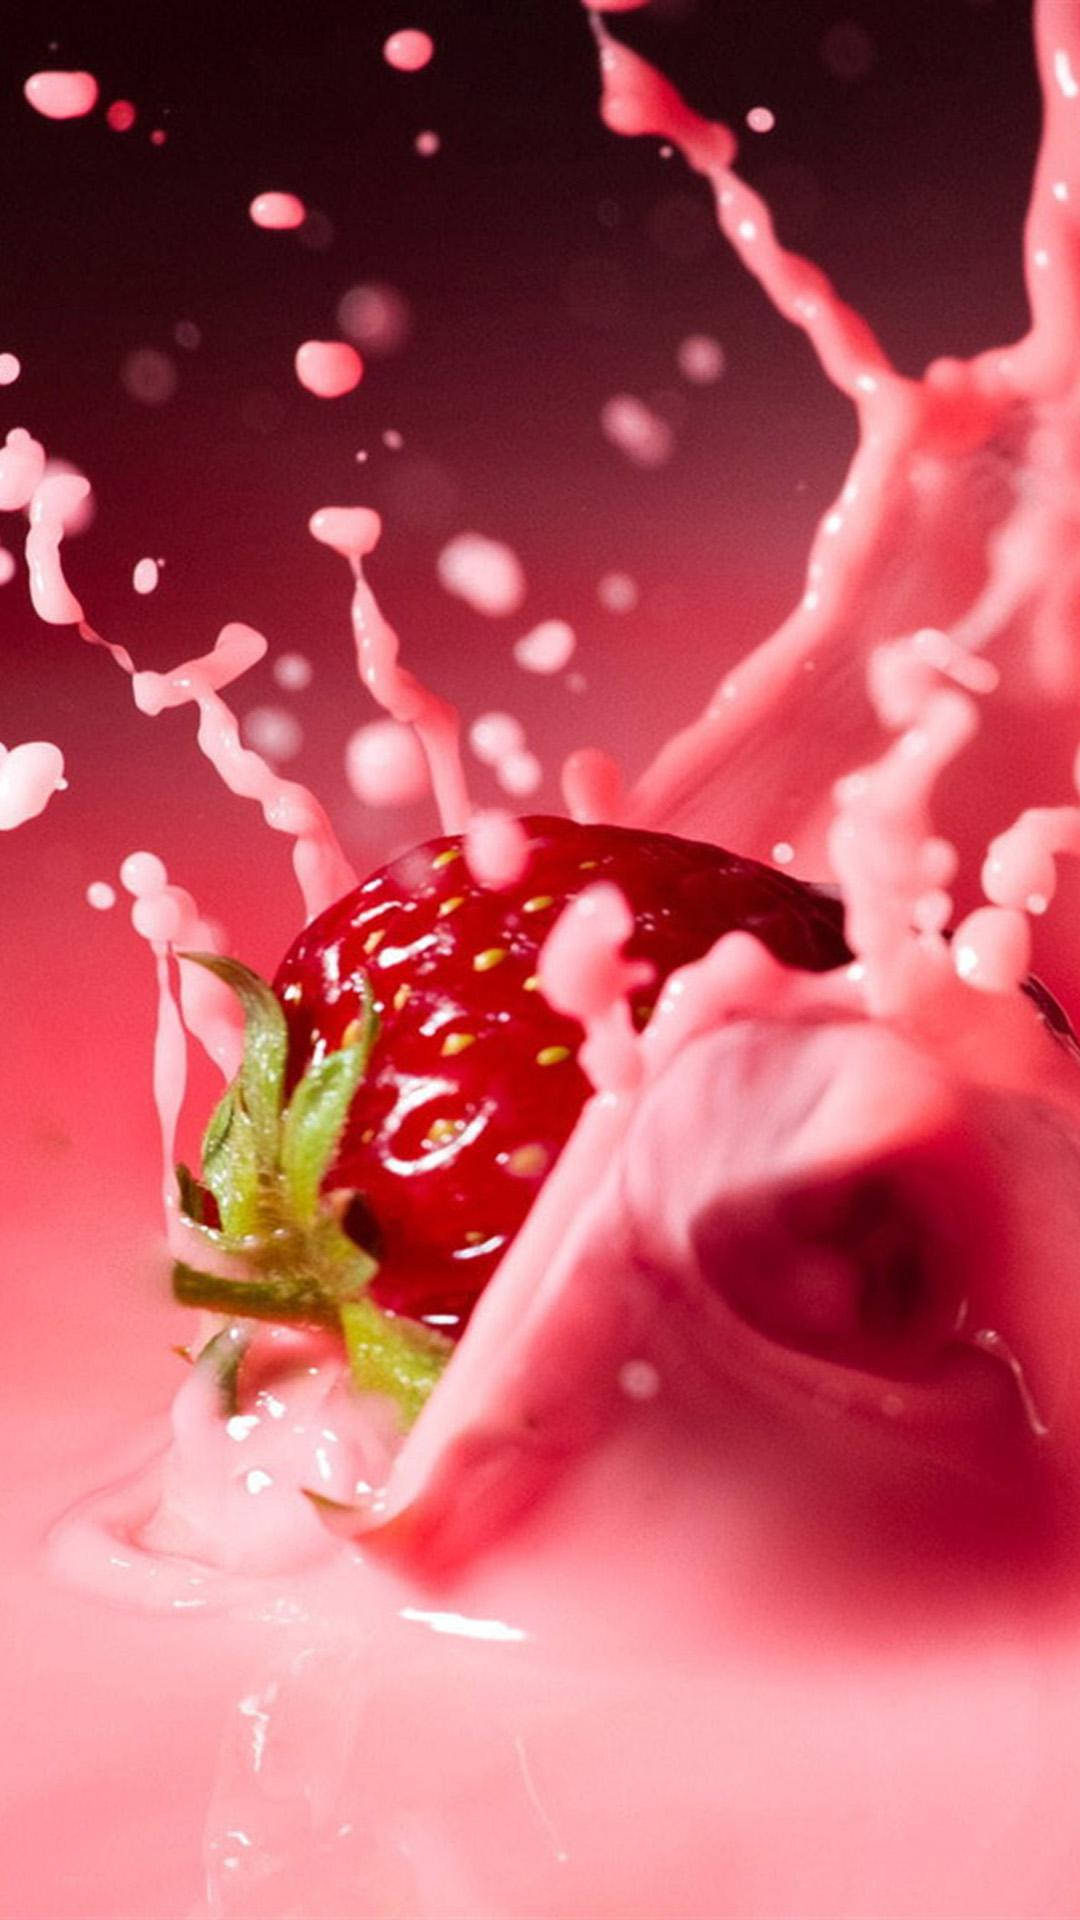 Cool, Refreshing Strawberry Milk Wallpaper